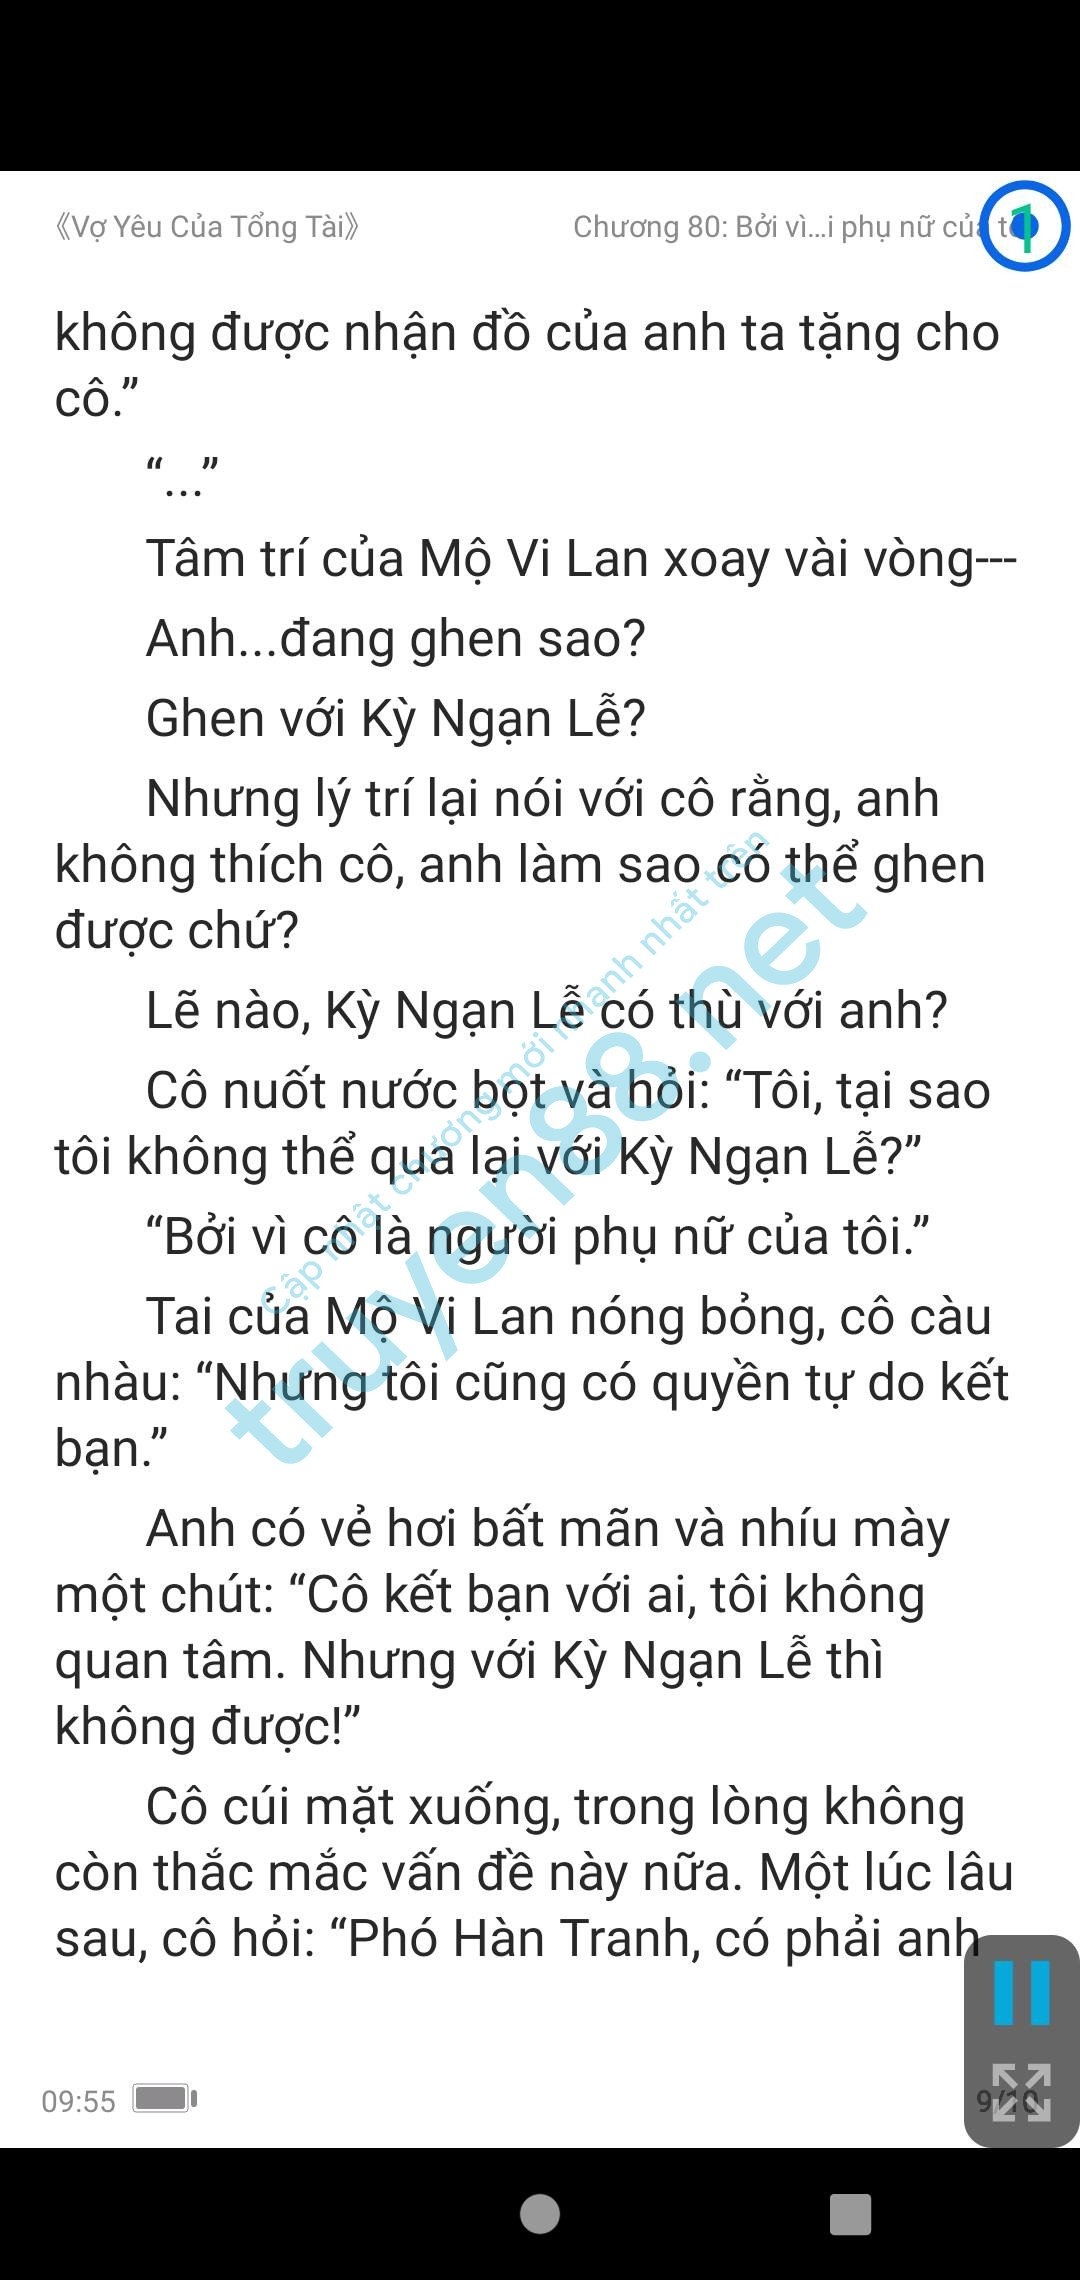 vo-yeu-cua-tong-tai-mo-vi-lan--pho-han-tranh-80-1